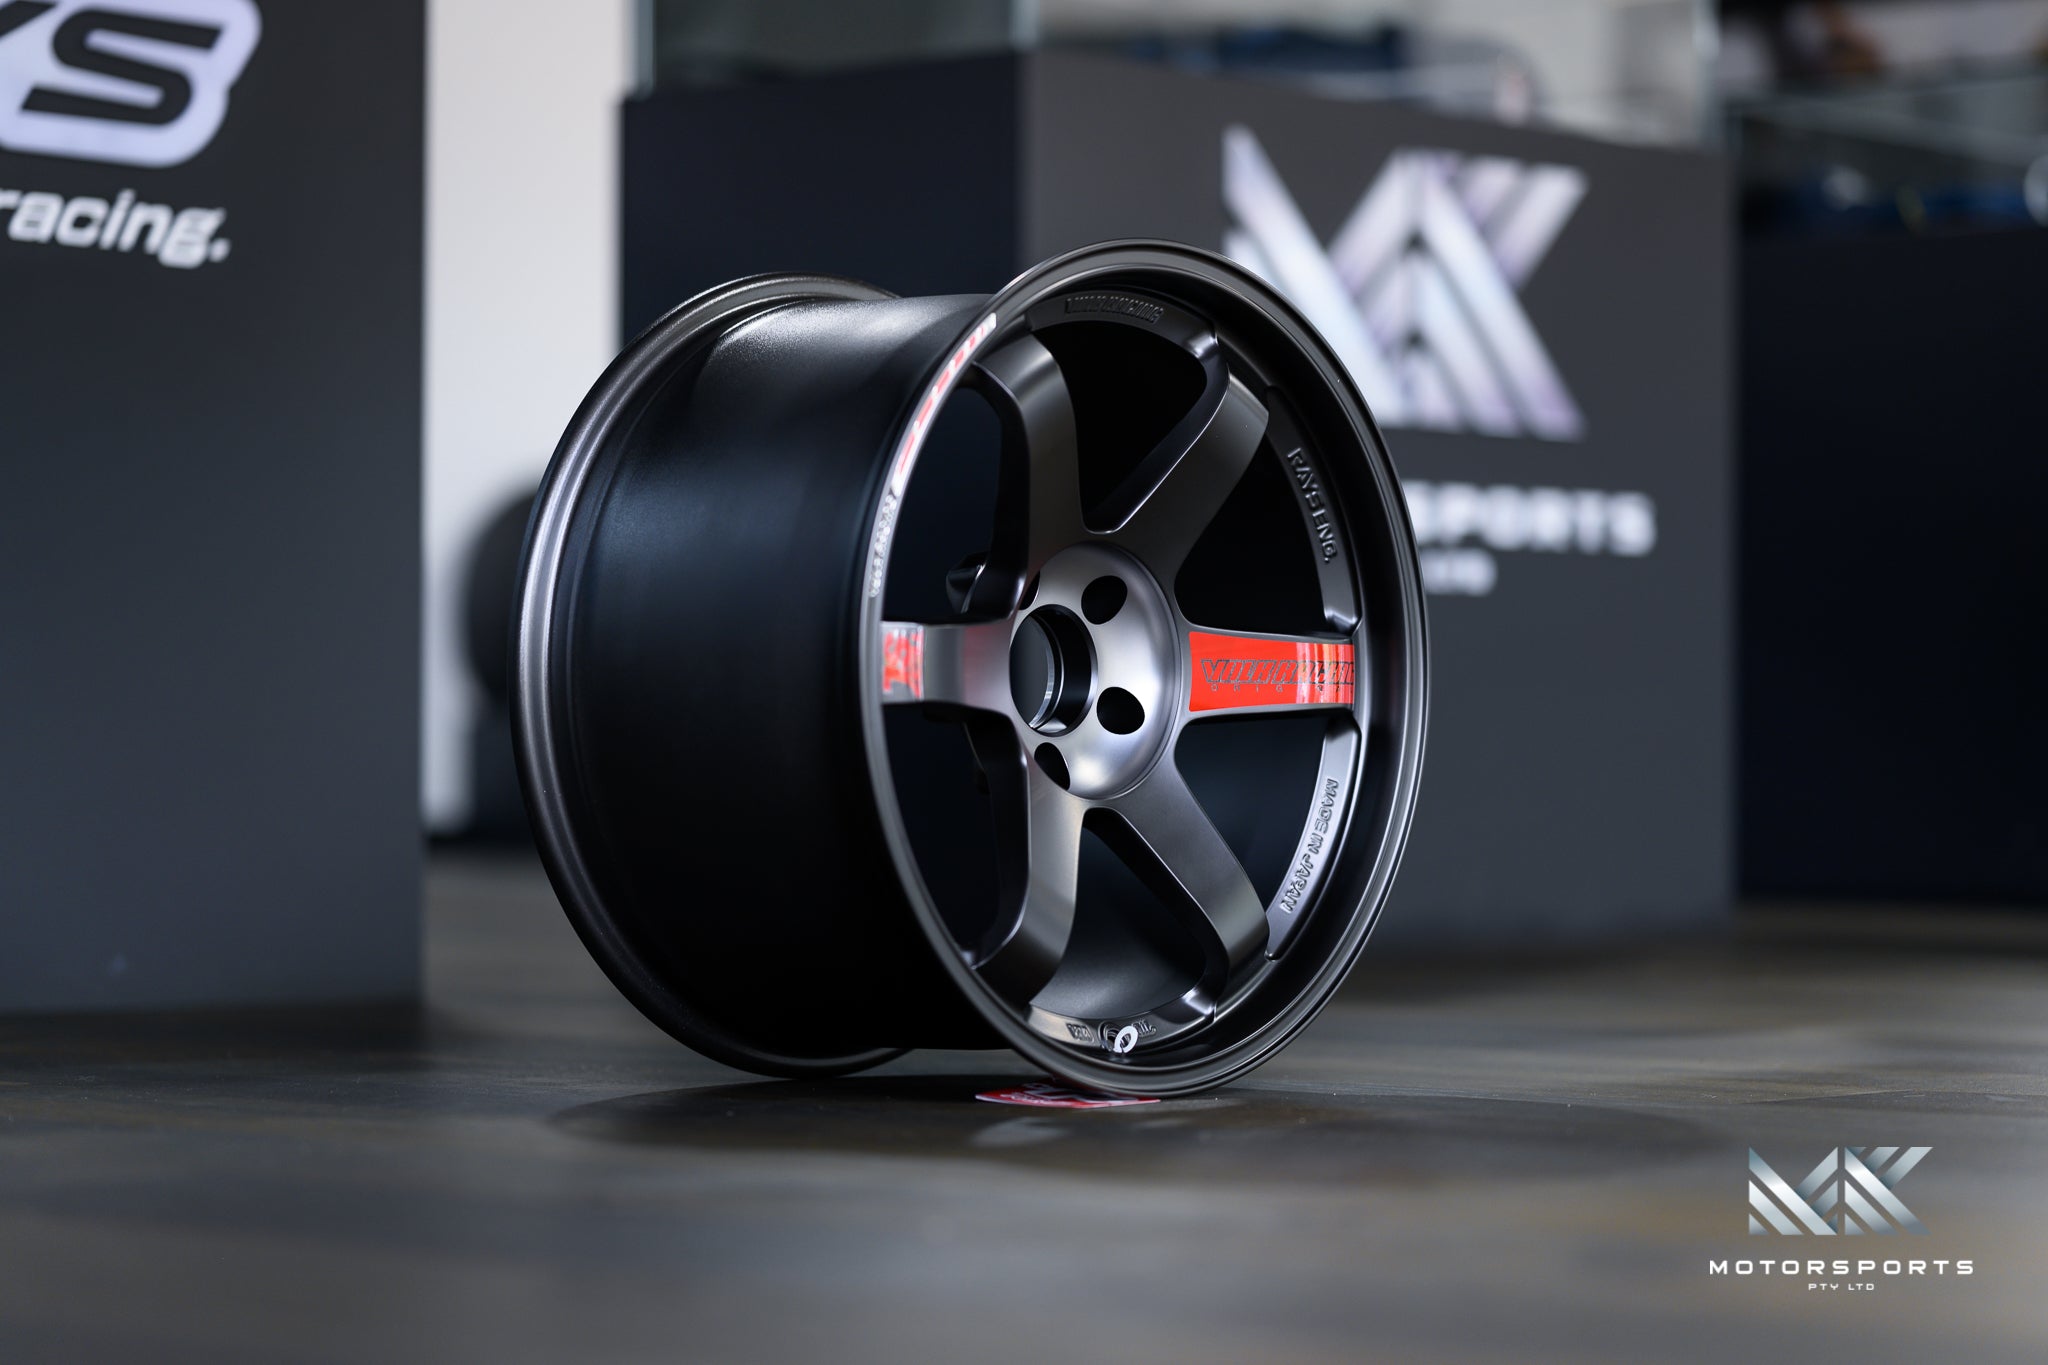 Volk Racing TE37SL Black Edition III - Premium Wheels from Volk Racing - From just $4200.00! Shop now at MK MOTORSPORTS